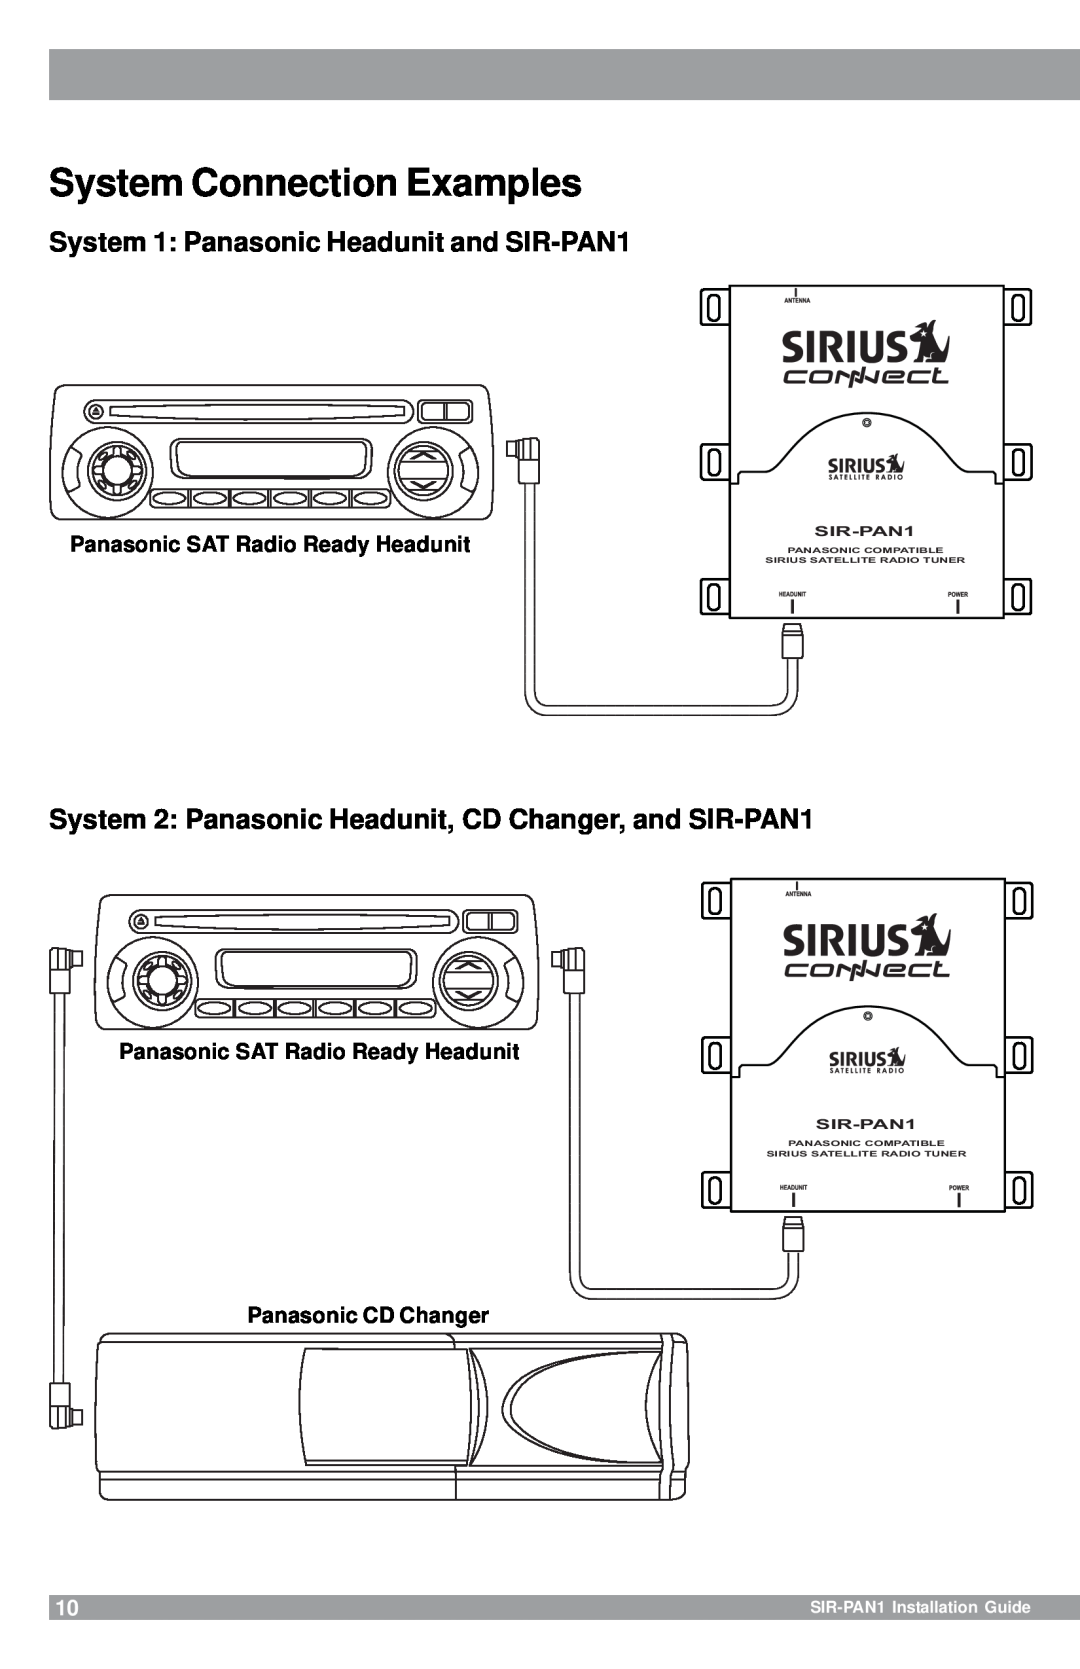 Sirius Satellite Radio SIR-PAN1 manual System Connection Examples, Panasonic SAT Radio Ready Headunit, Panasonic CD Changer 